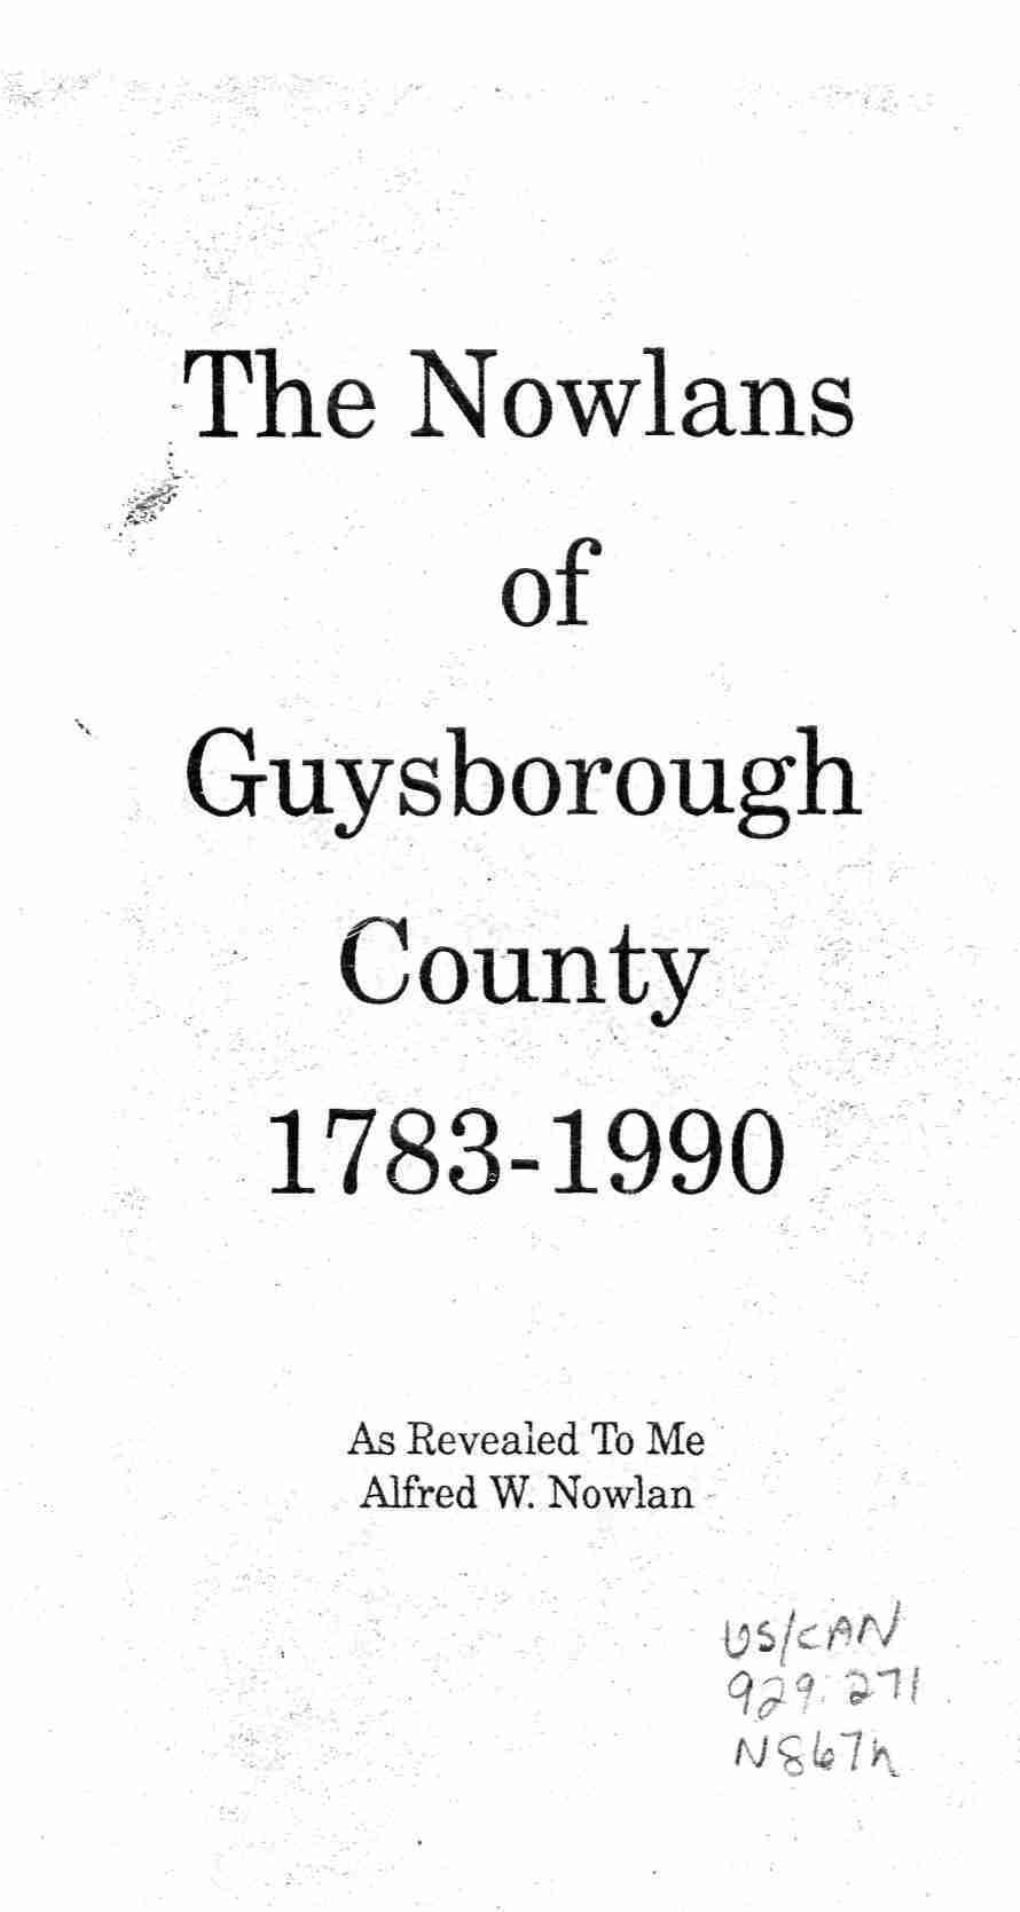 The Nowlans of Guysborough County 1783-1990